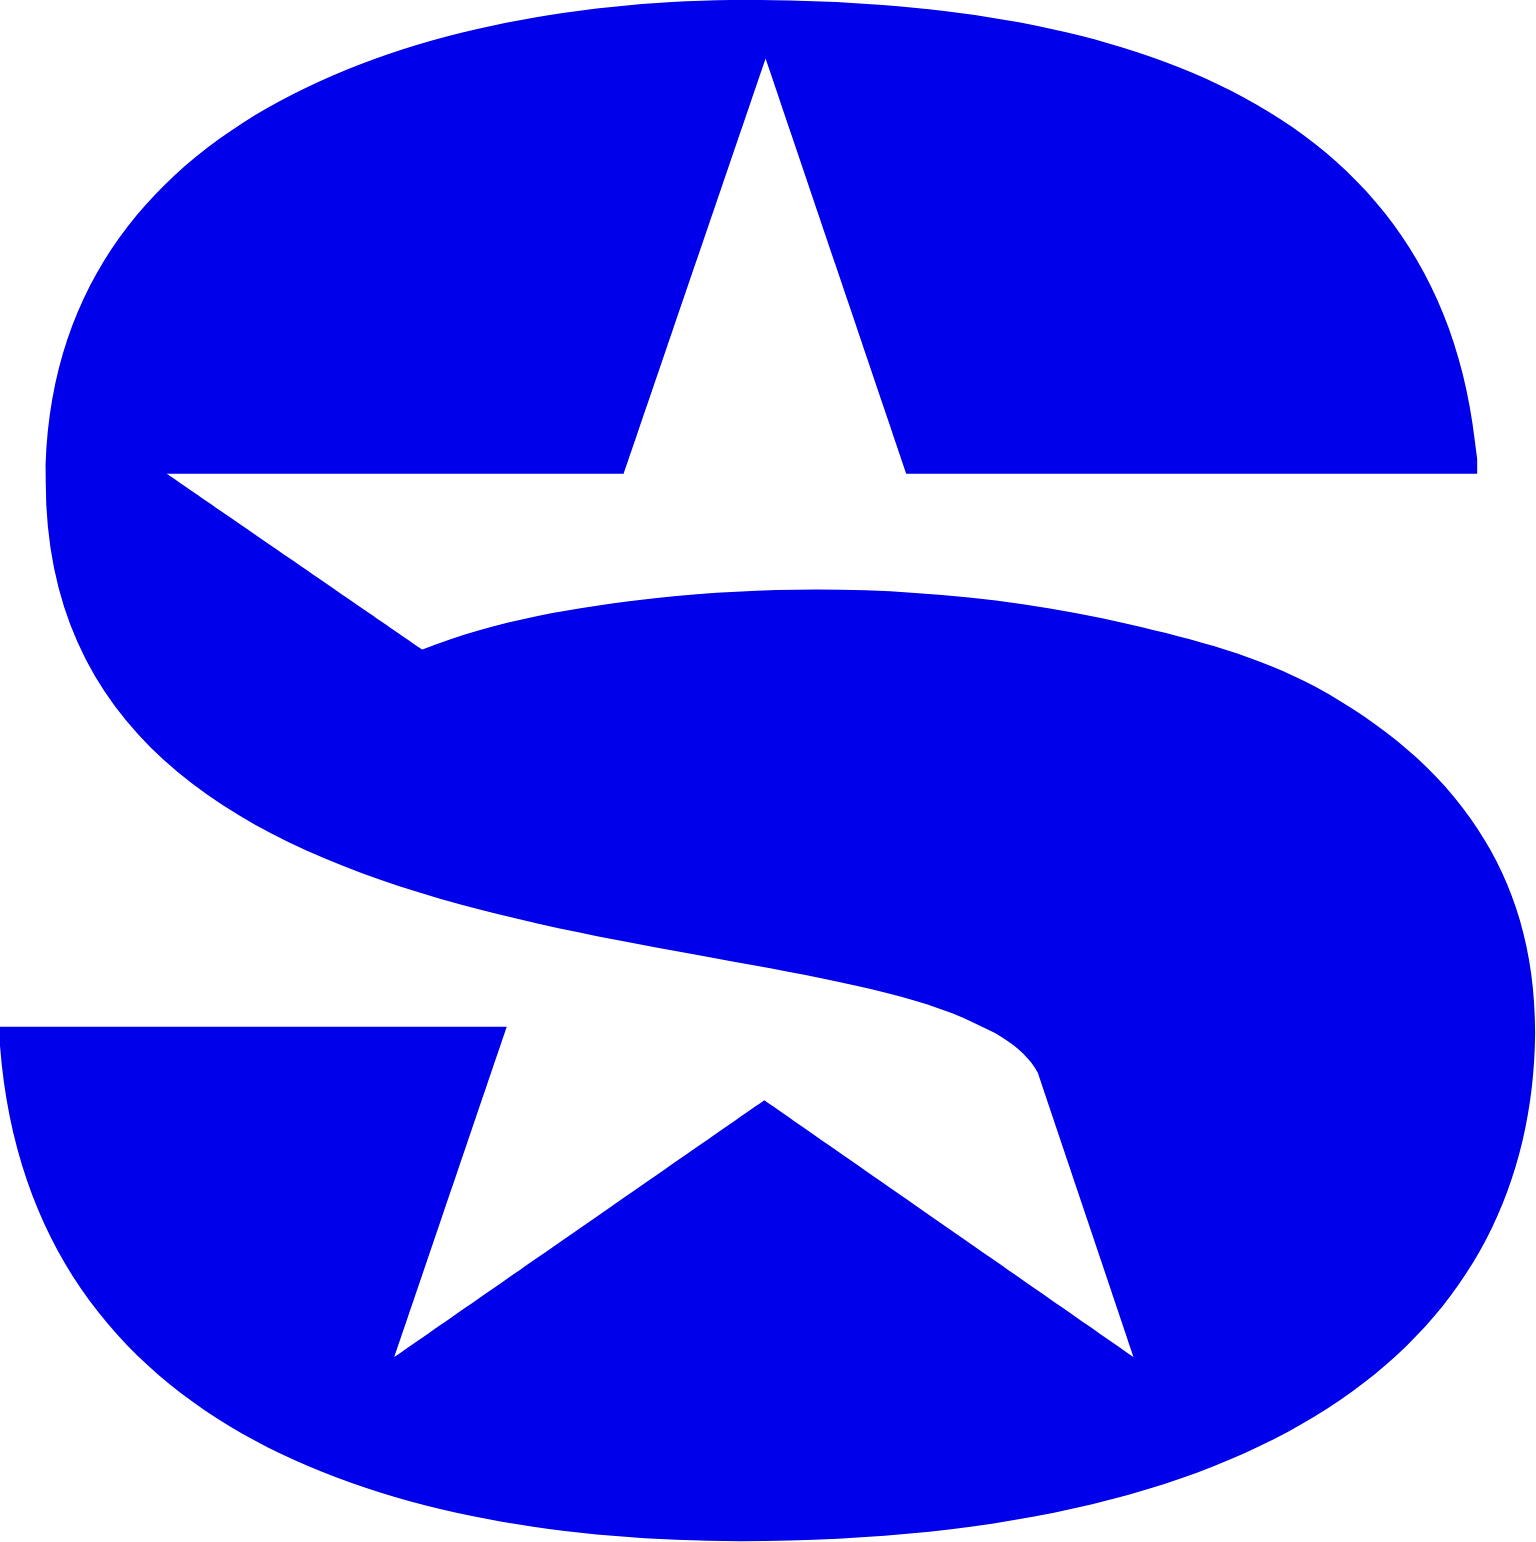 Sirius XM logo (PNG transparent)